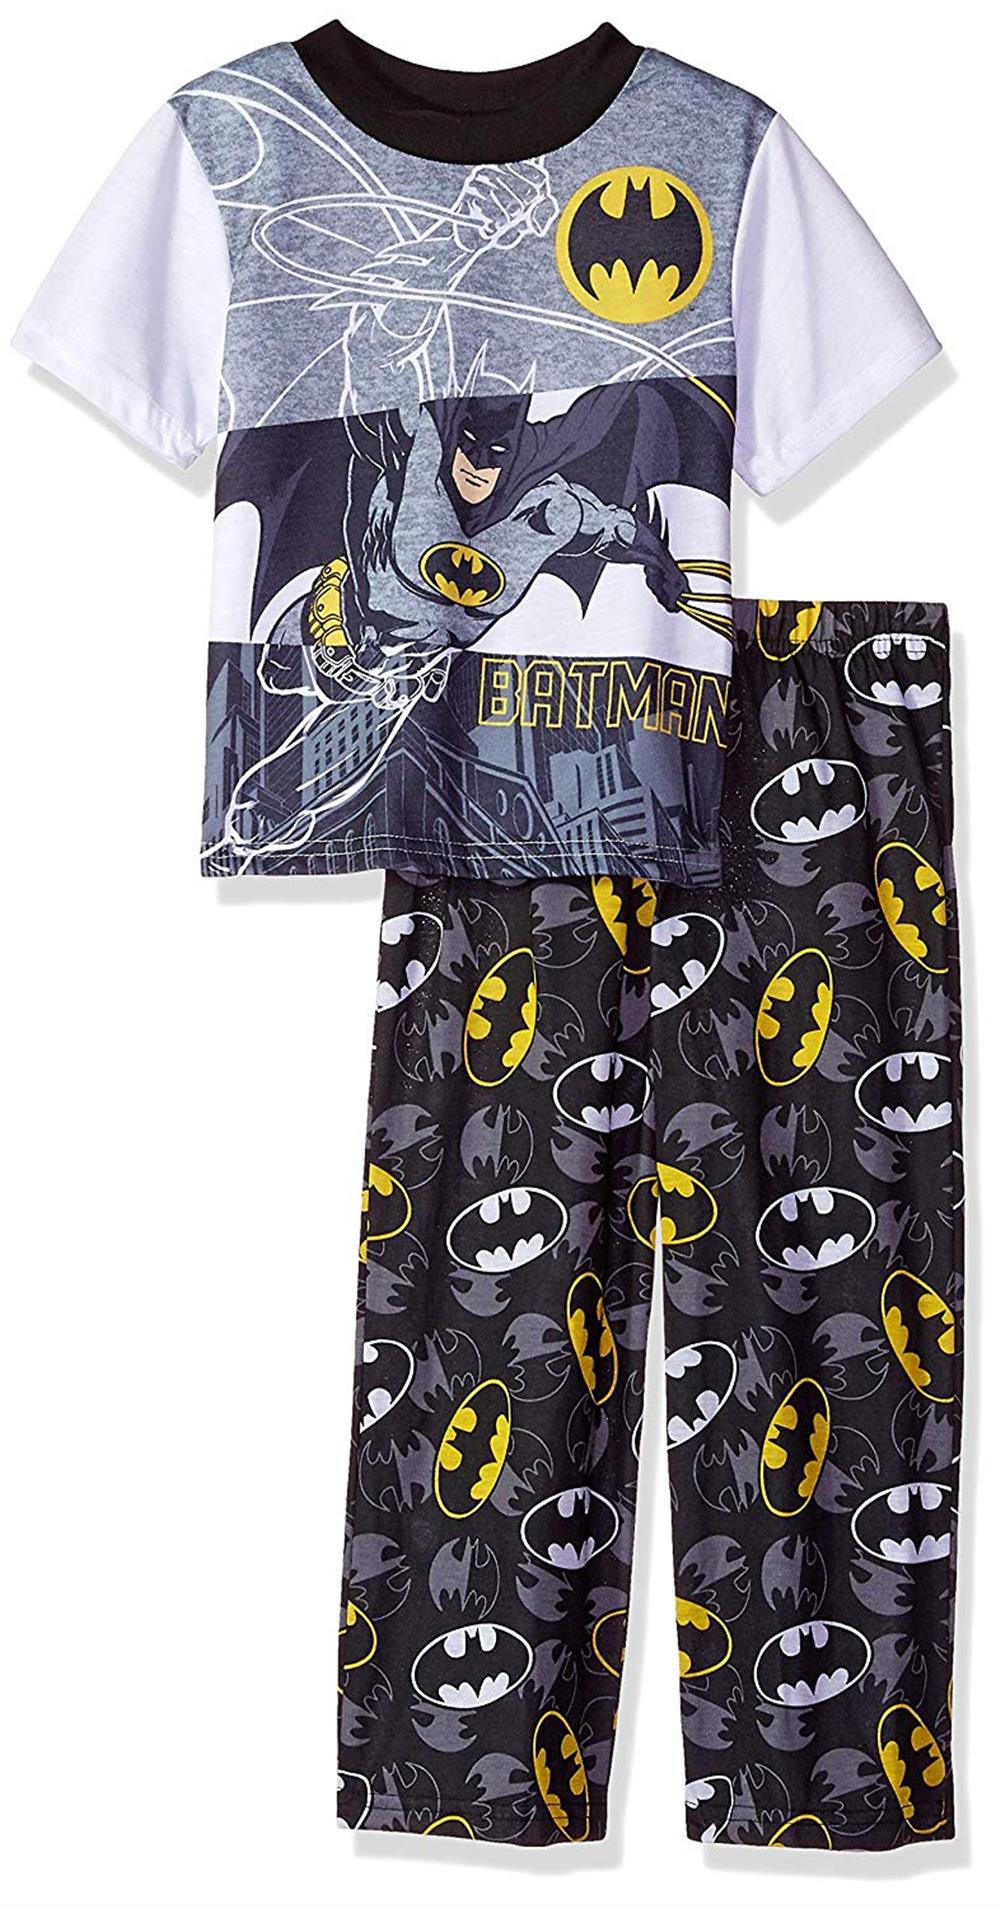 Batman Boys 4-7 2 Piece Pajama Set